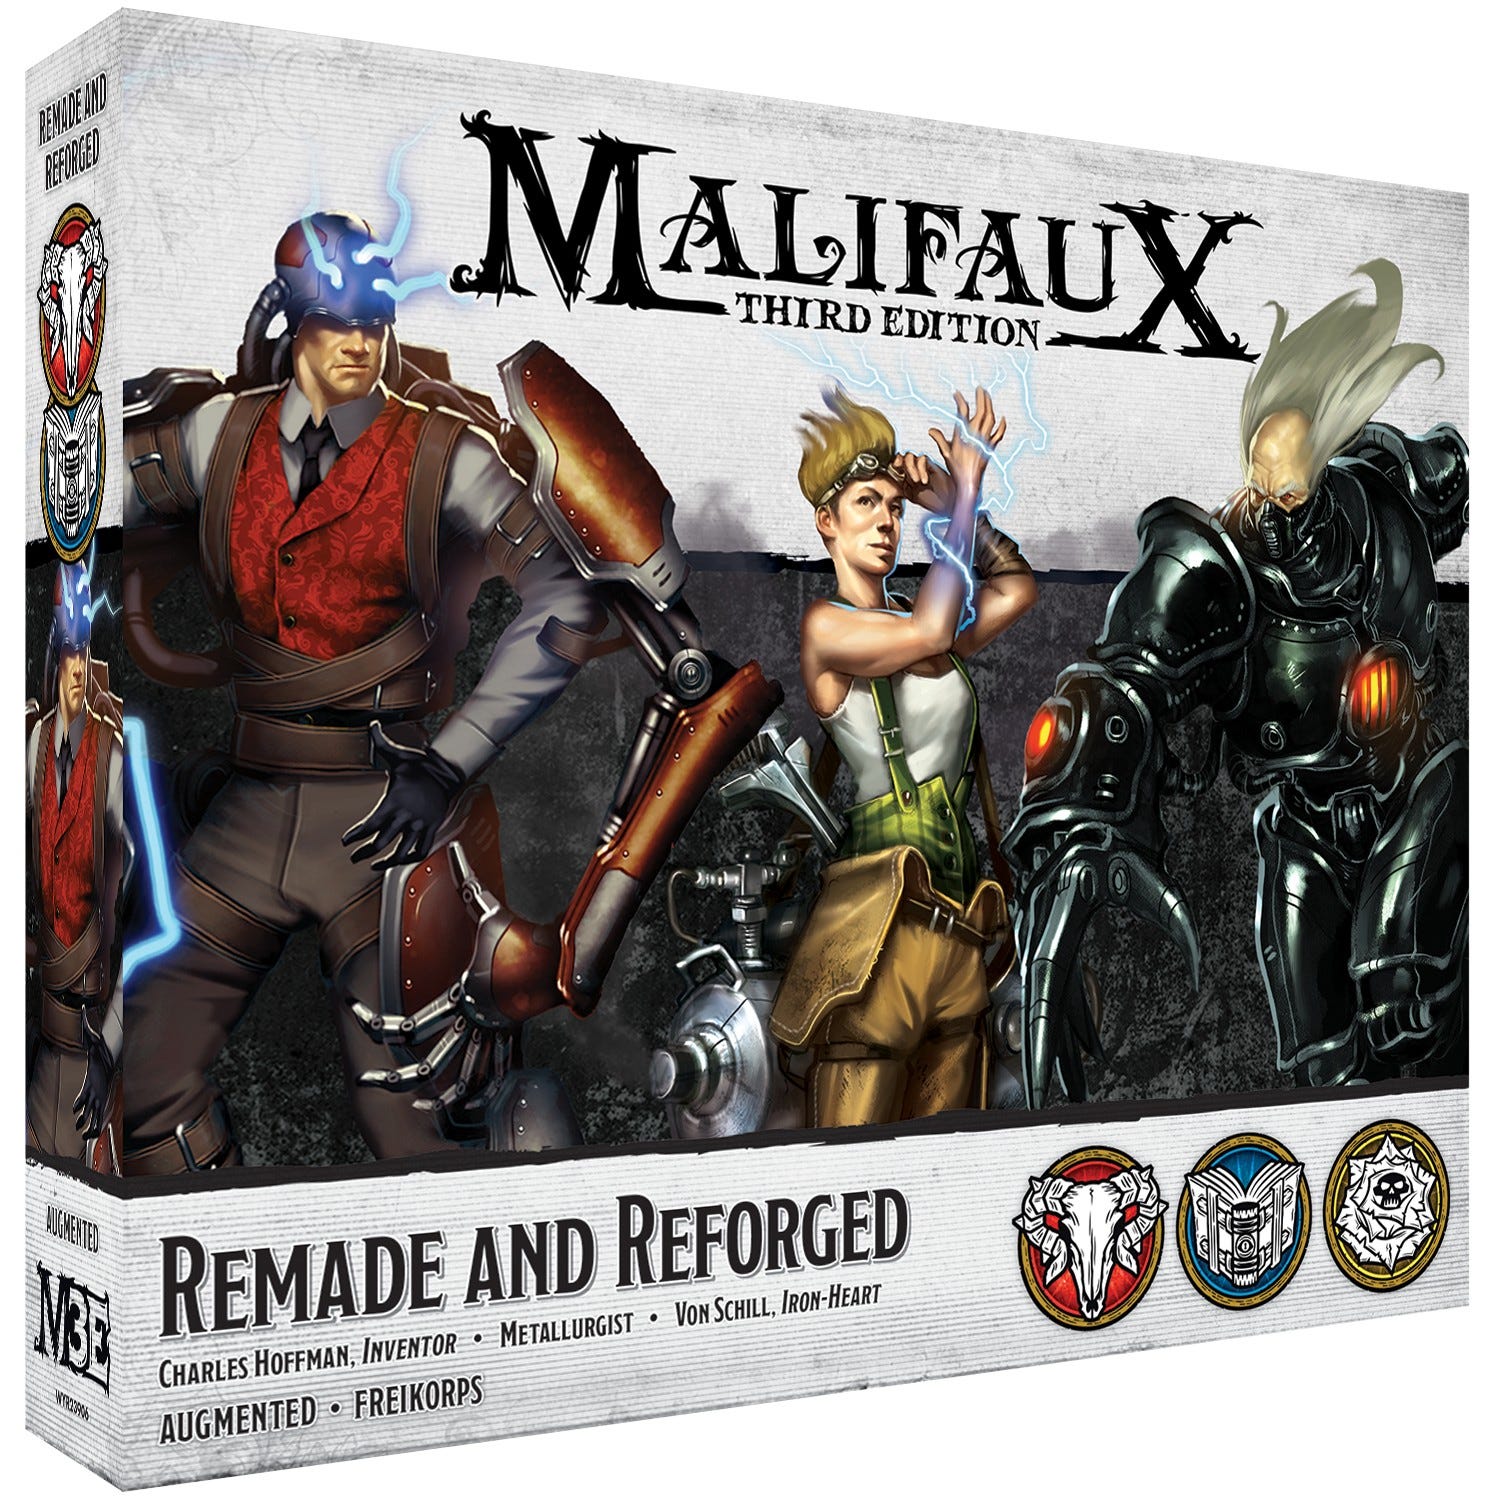 Malifaux - Image Three